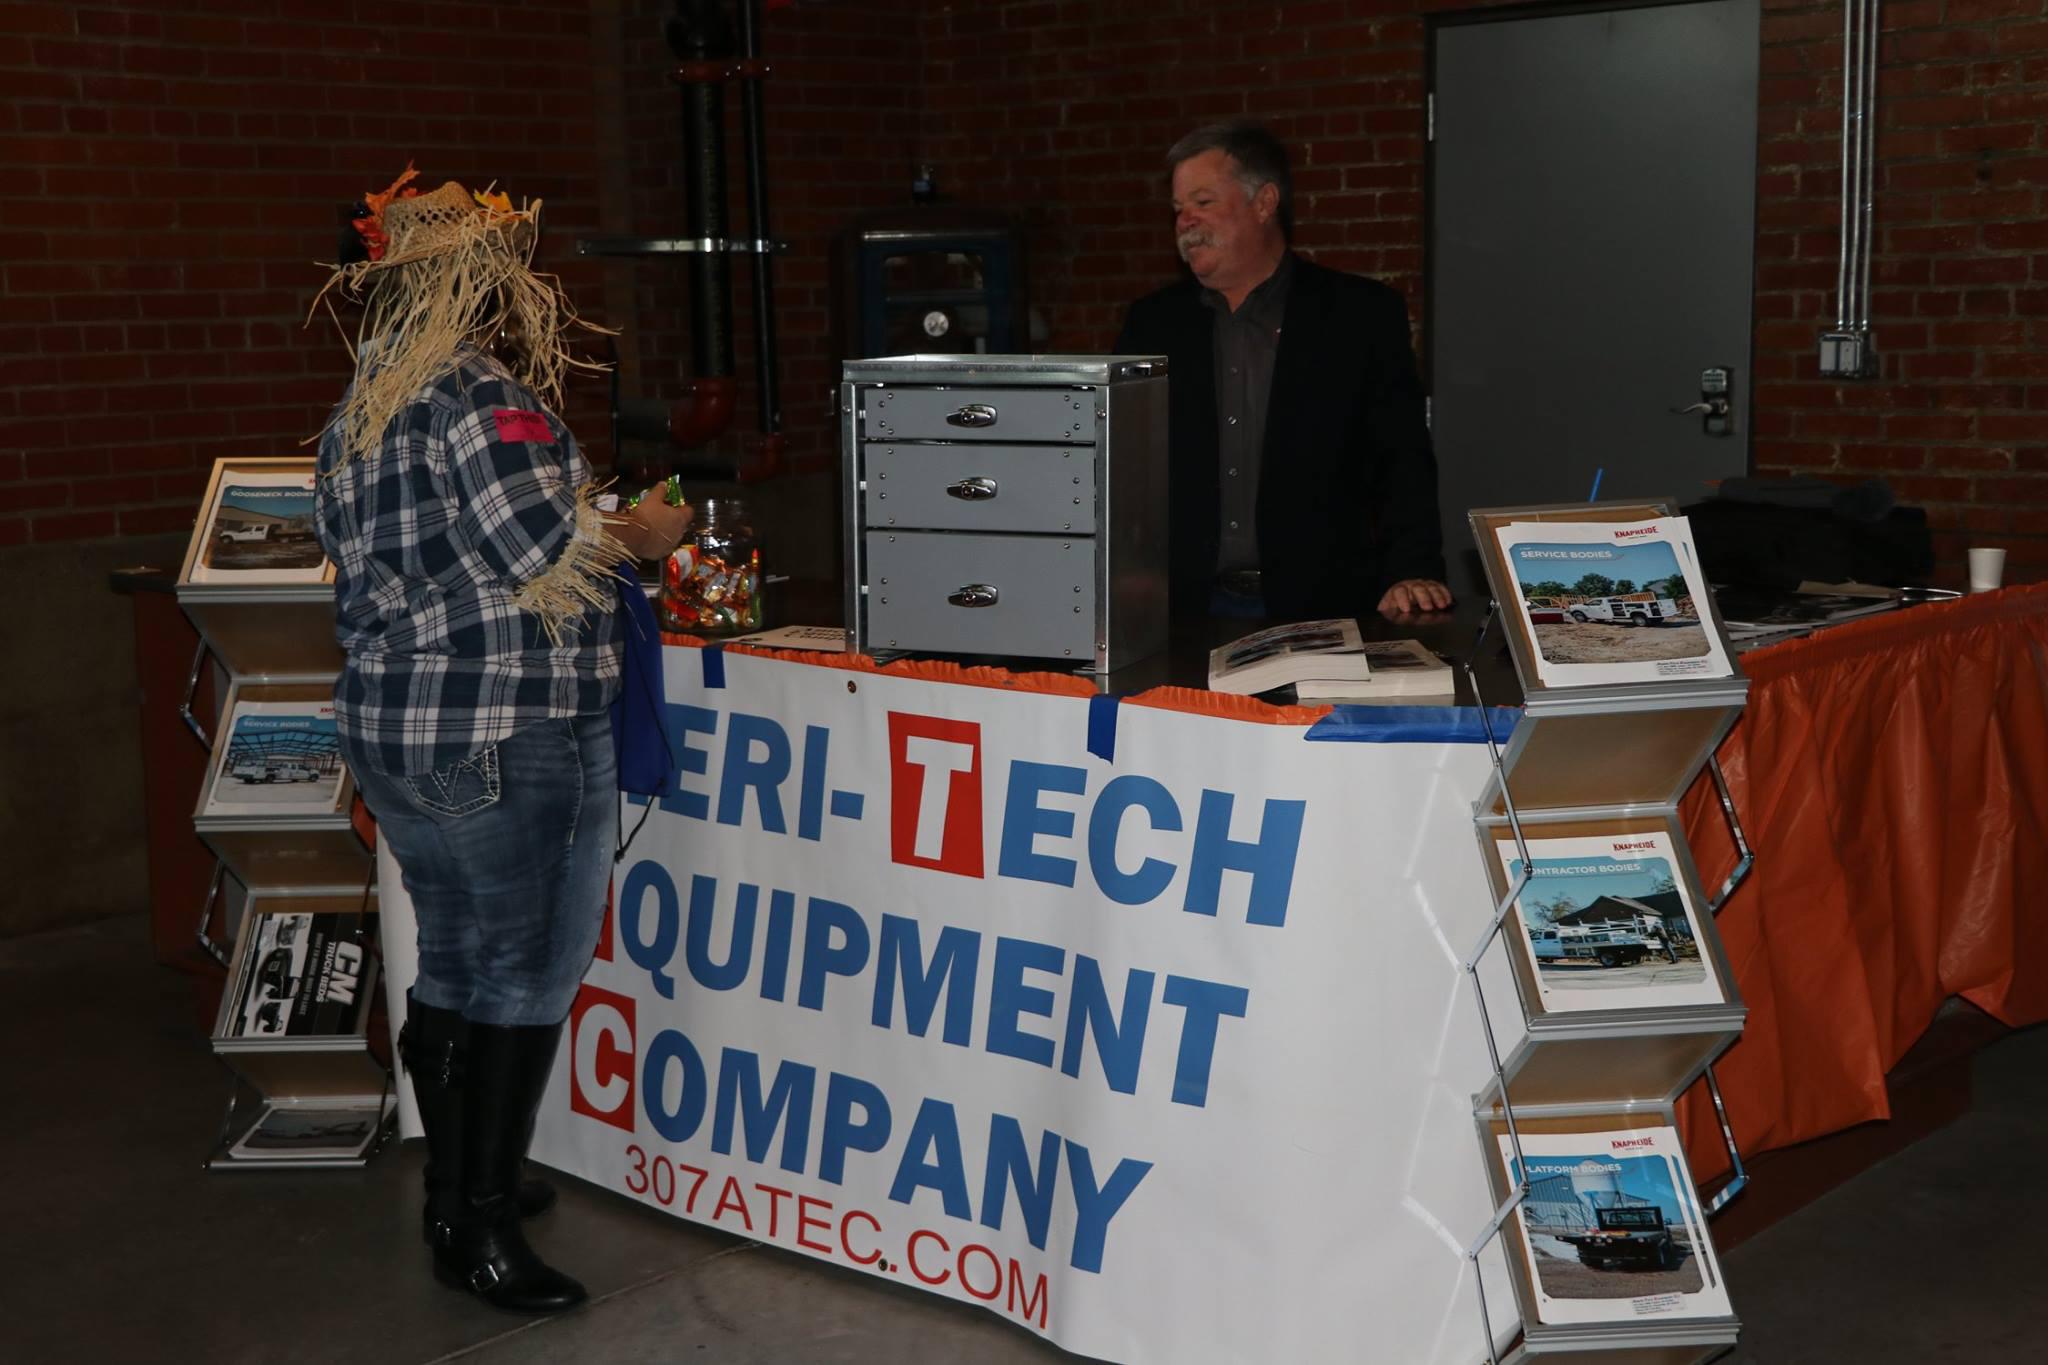 Ameri-Tech Equipment Company Riverton (307)332-4000